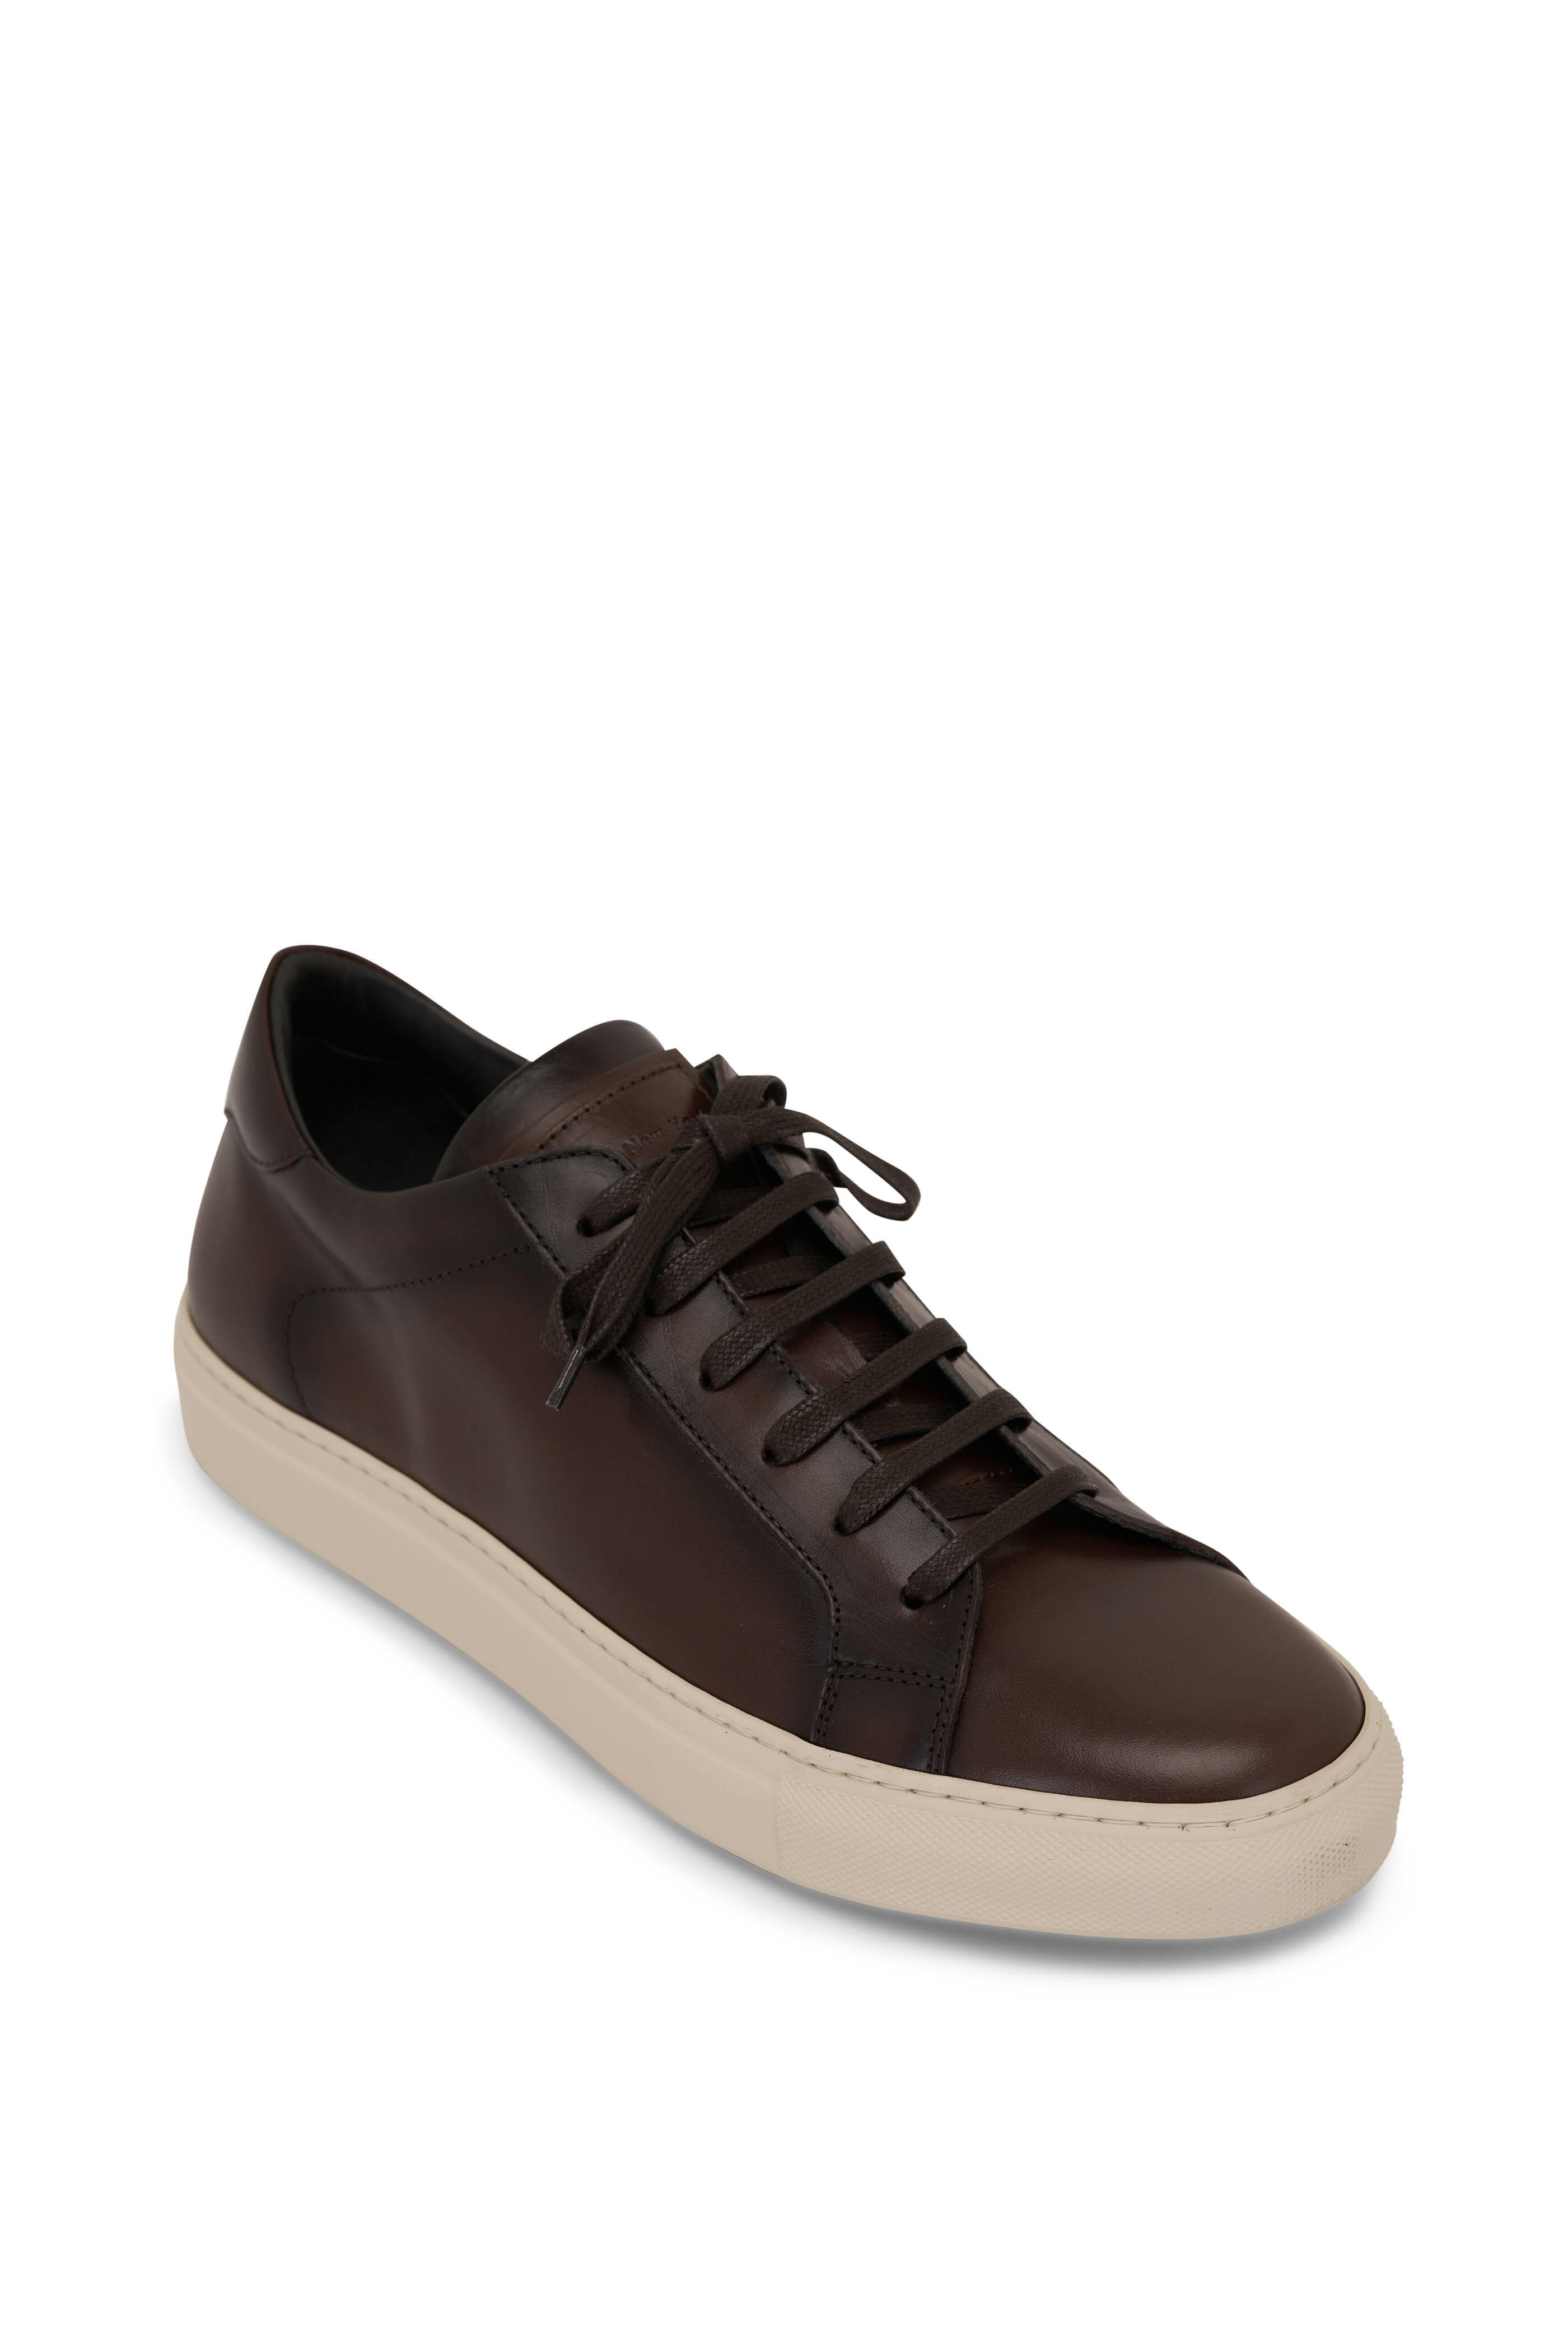 To Boot New York - Pescara Dark Brown Leather Sneaker